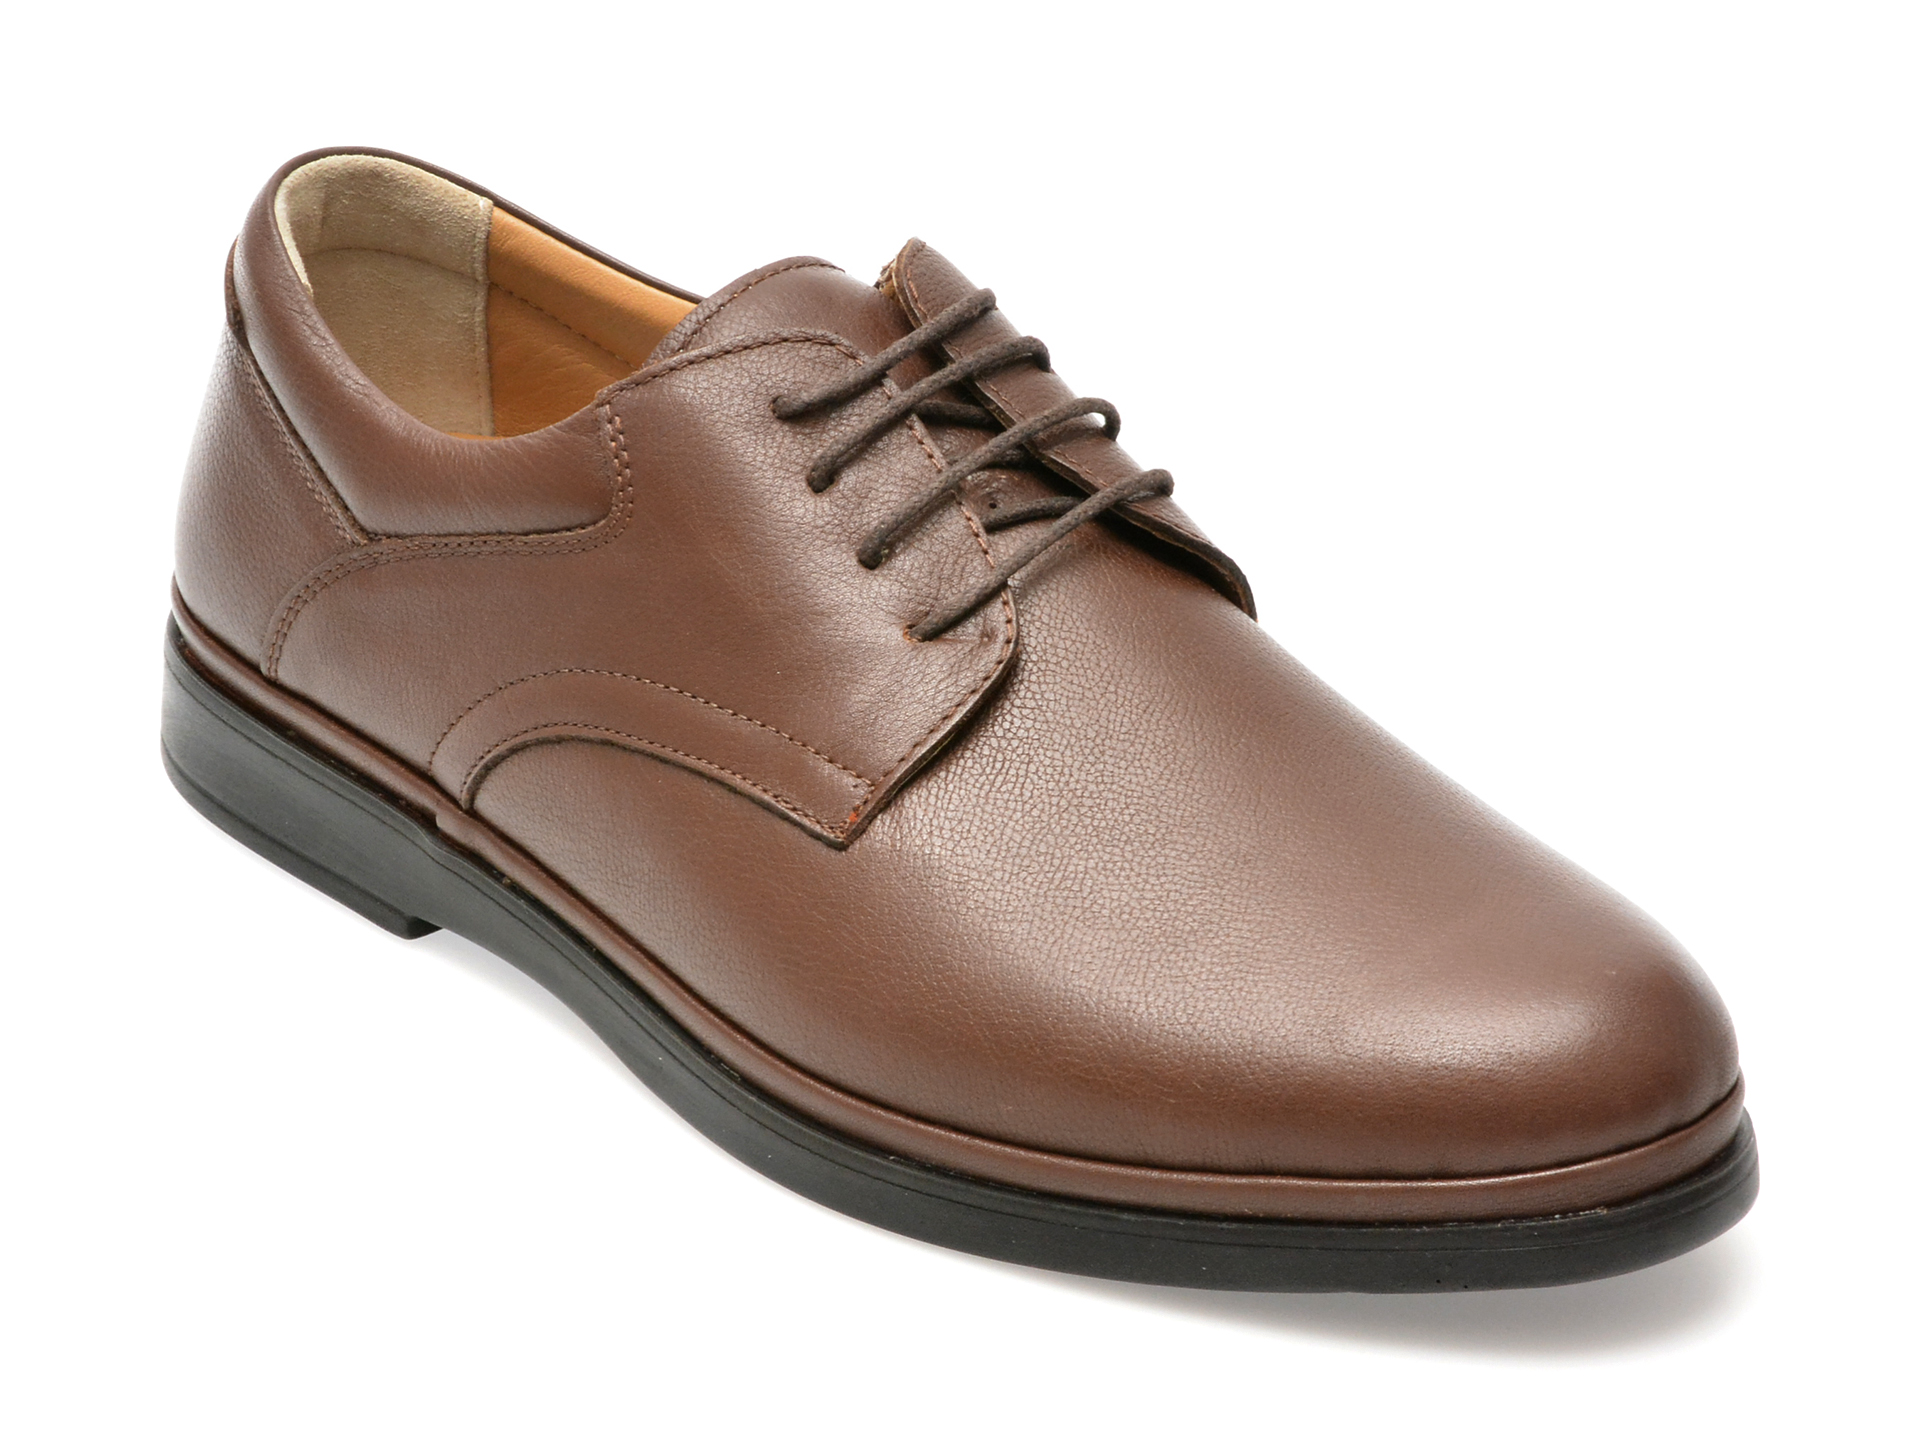 Pantofi AXXELLL maro, SH303, din piele naturala /barbati/pantofi